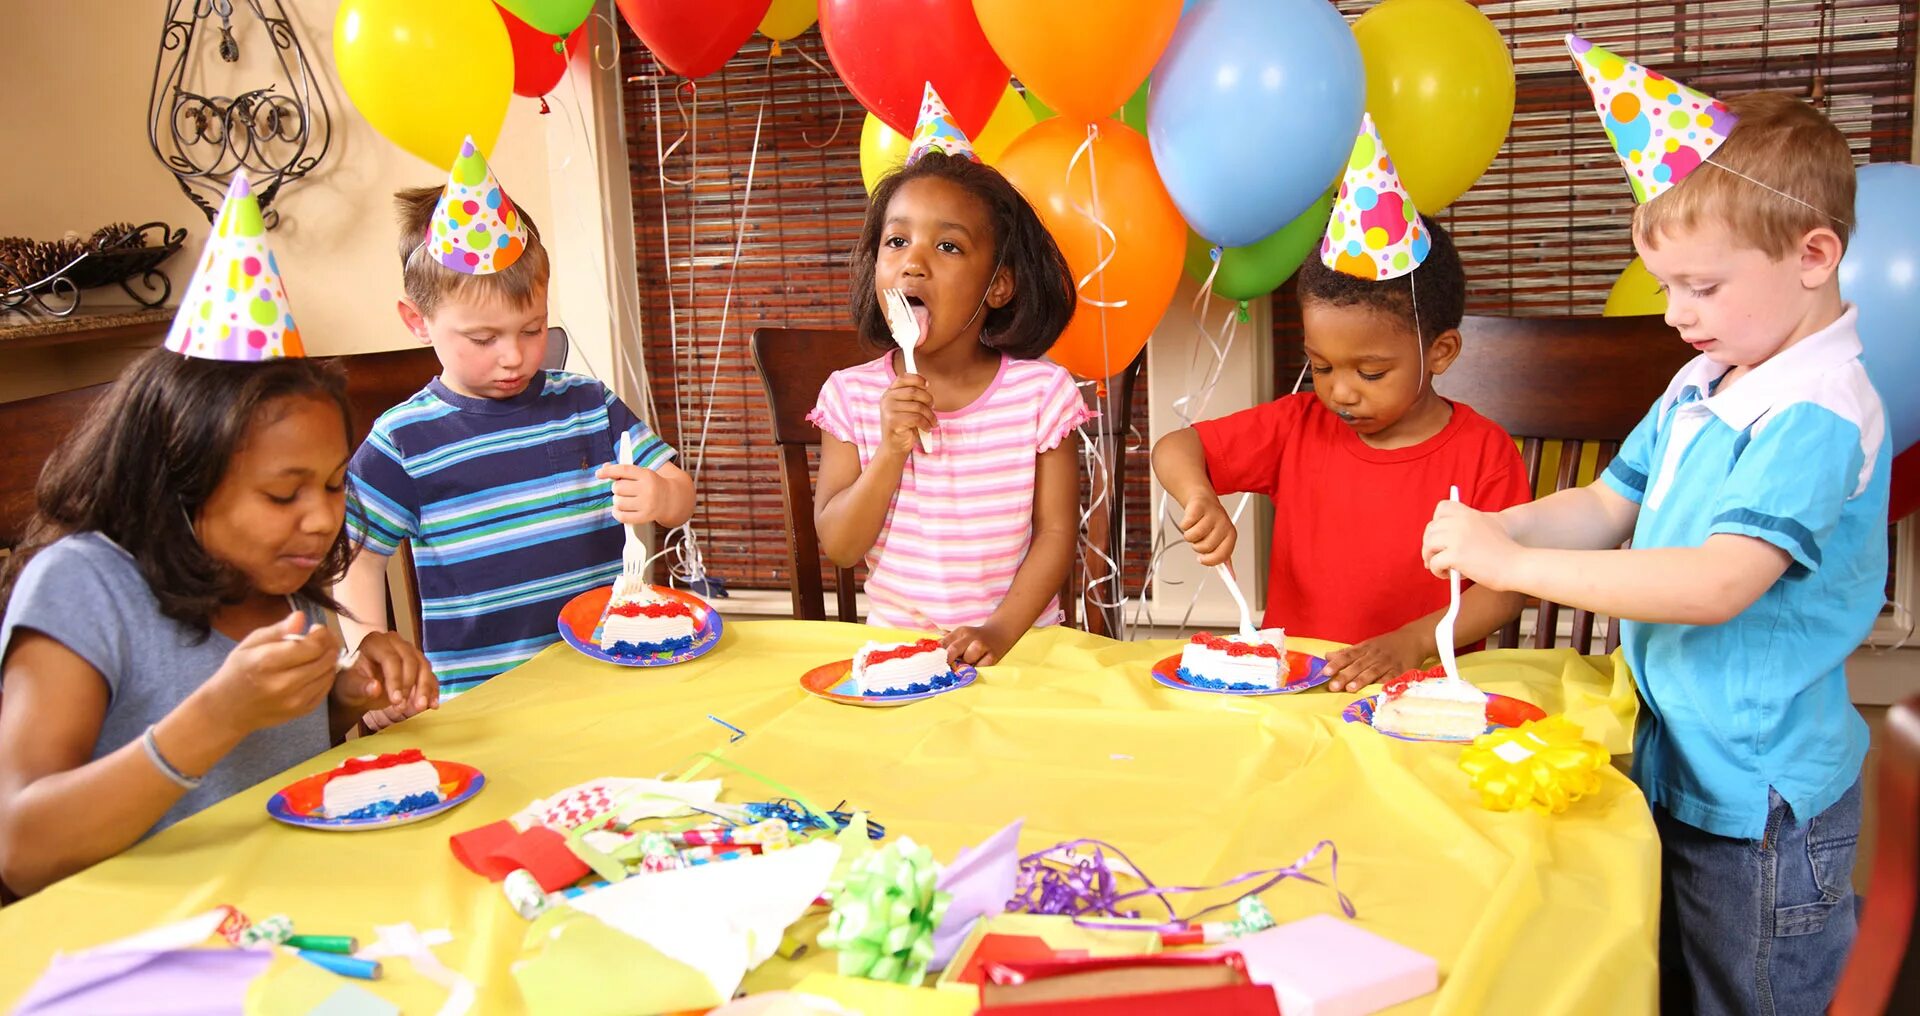 Make a party do a party. Детский праздник. Празднование дня рождения. Празднование дня рождения ребенка. Отпраздновать детский день рождения.